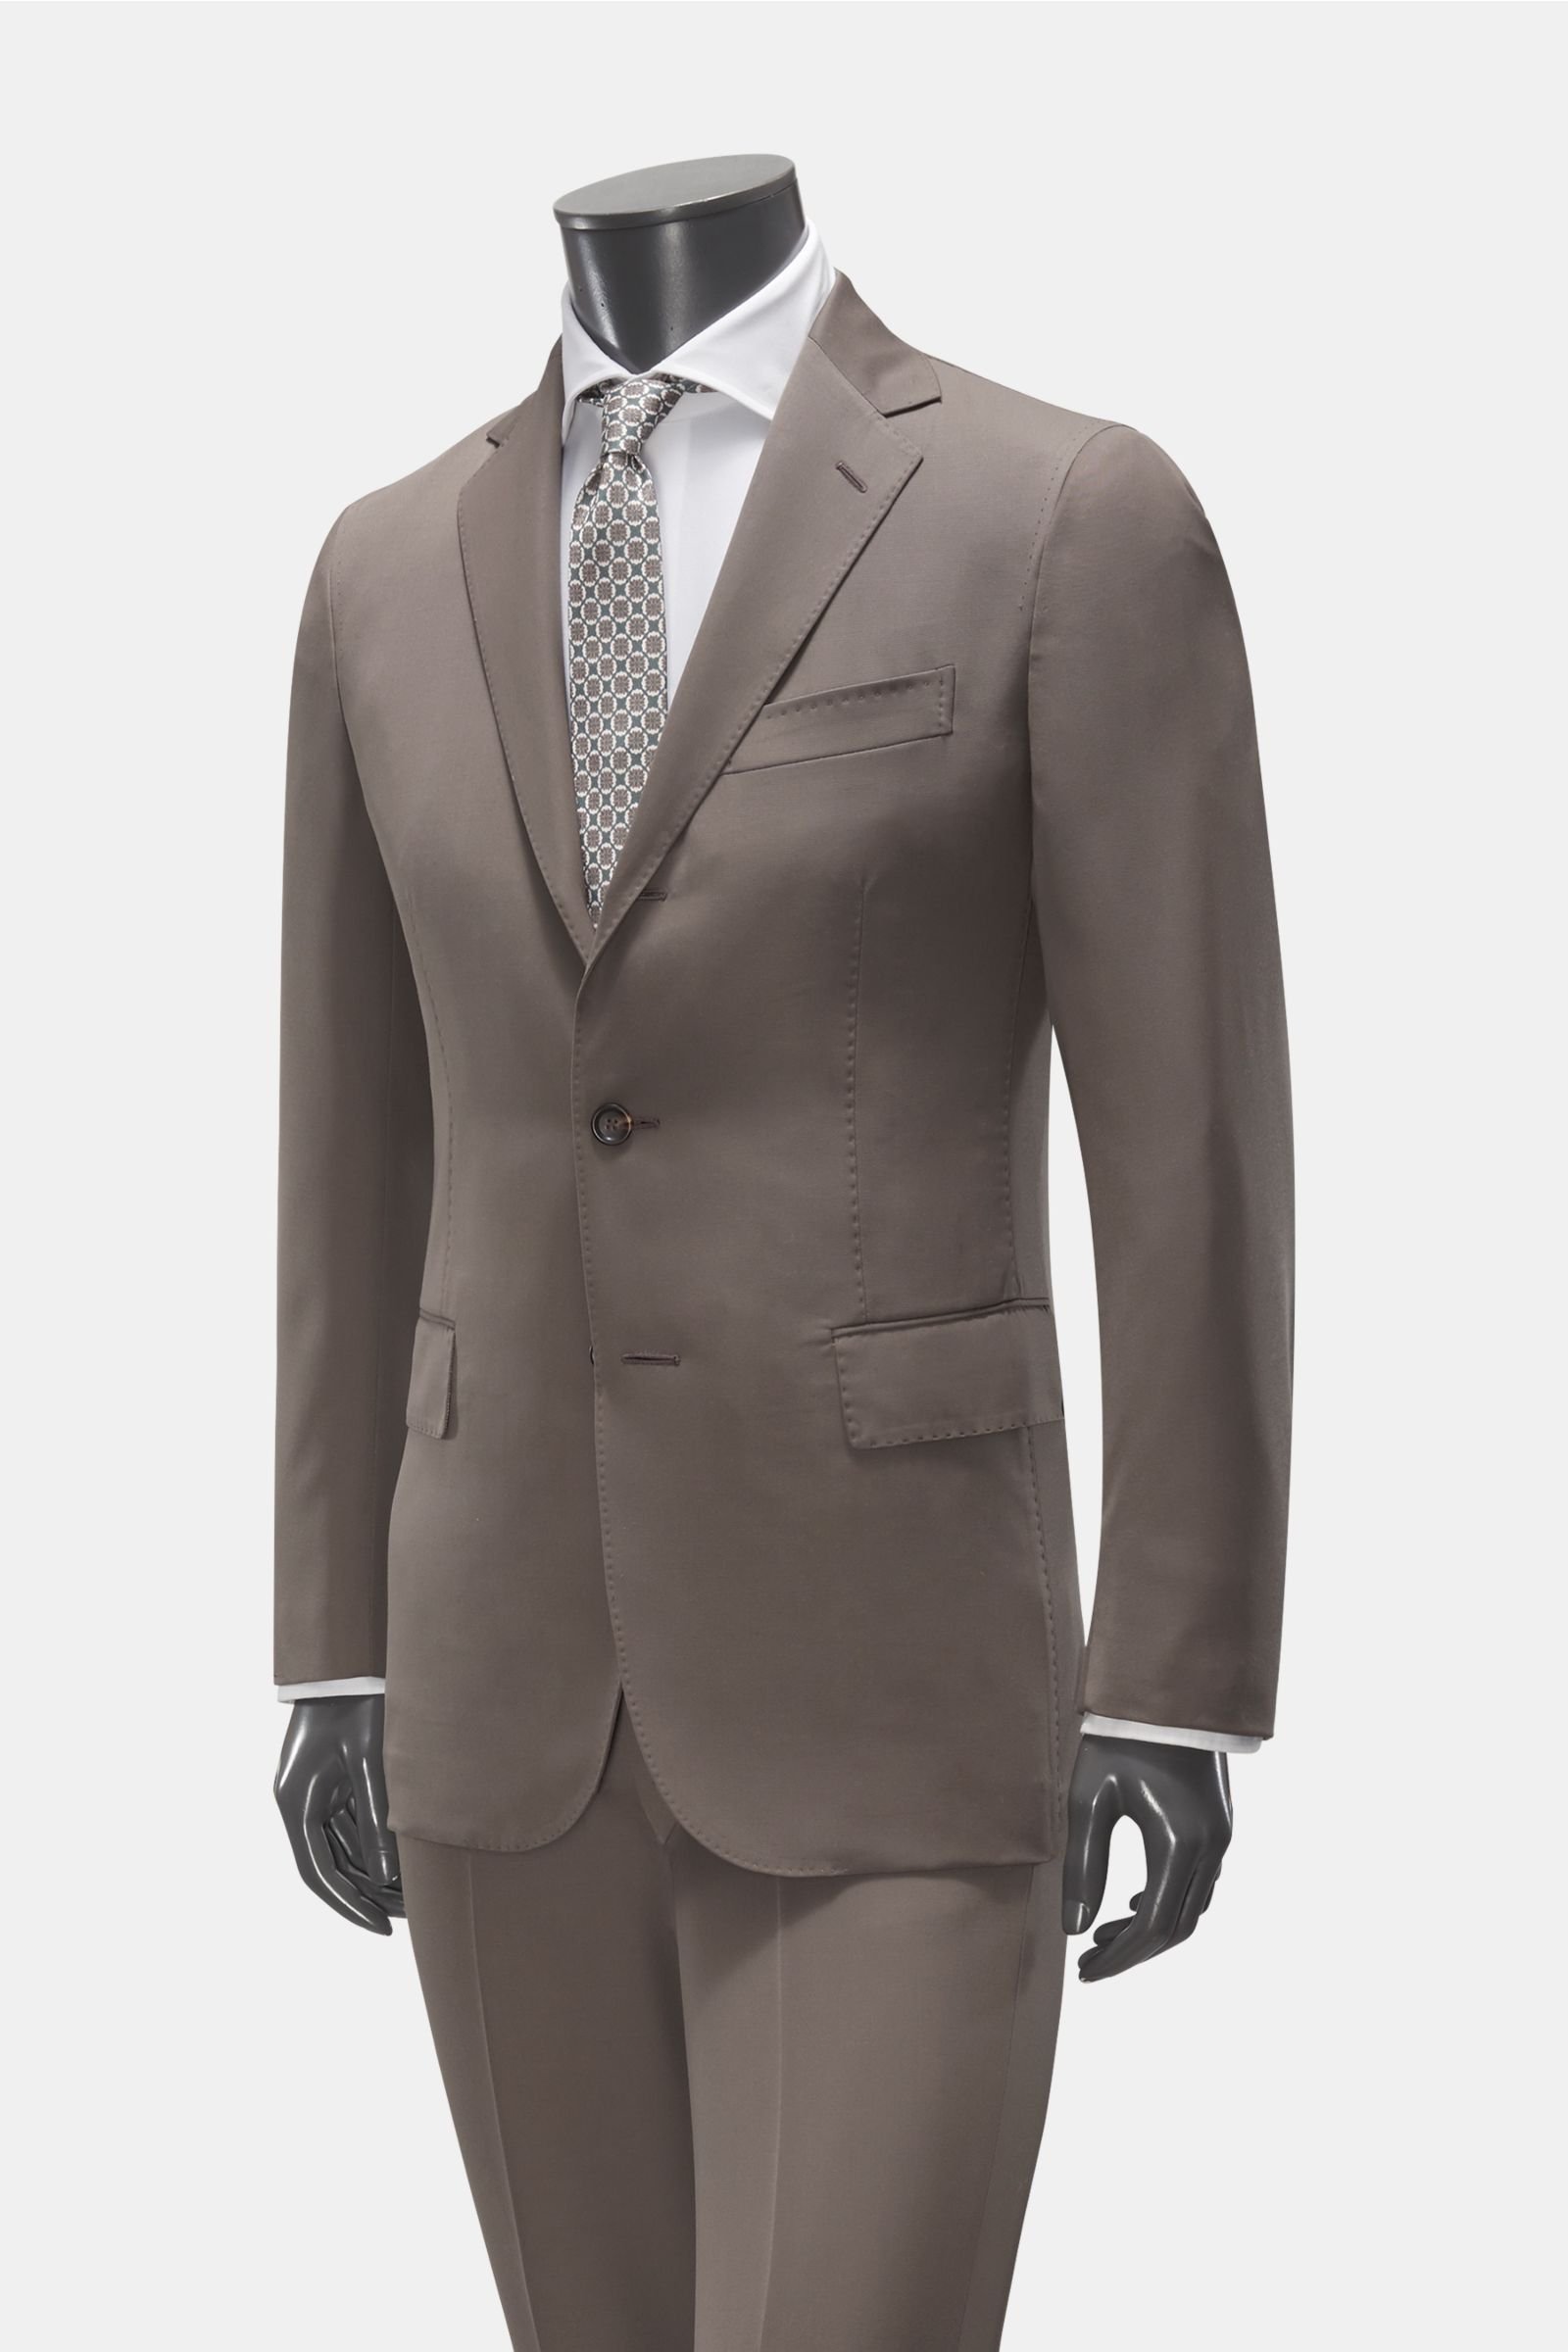 Suit grey-brown